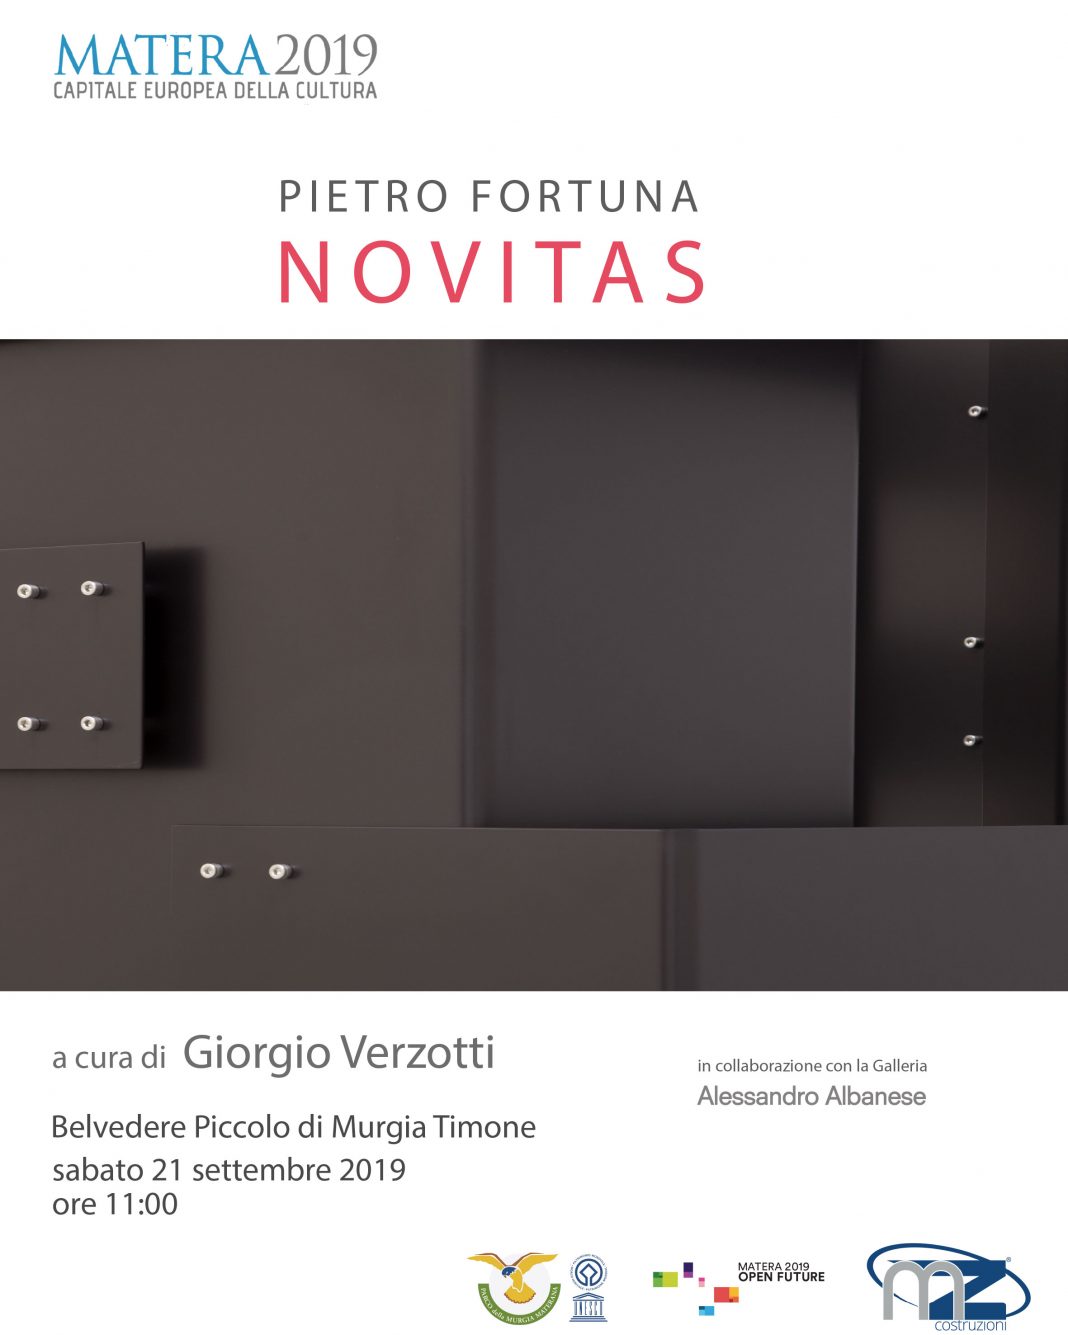 Pietro Fortuna – Novitashttps://www.exibart.com/repository/media/formidable/11/NOVITAS1-1068x1335.jpg